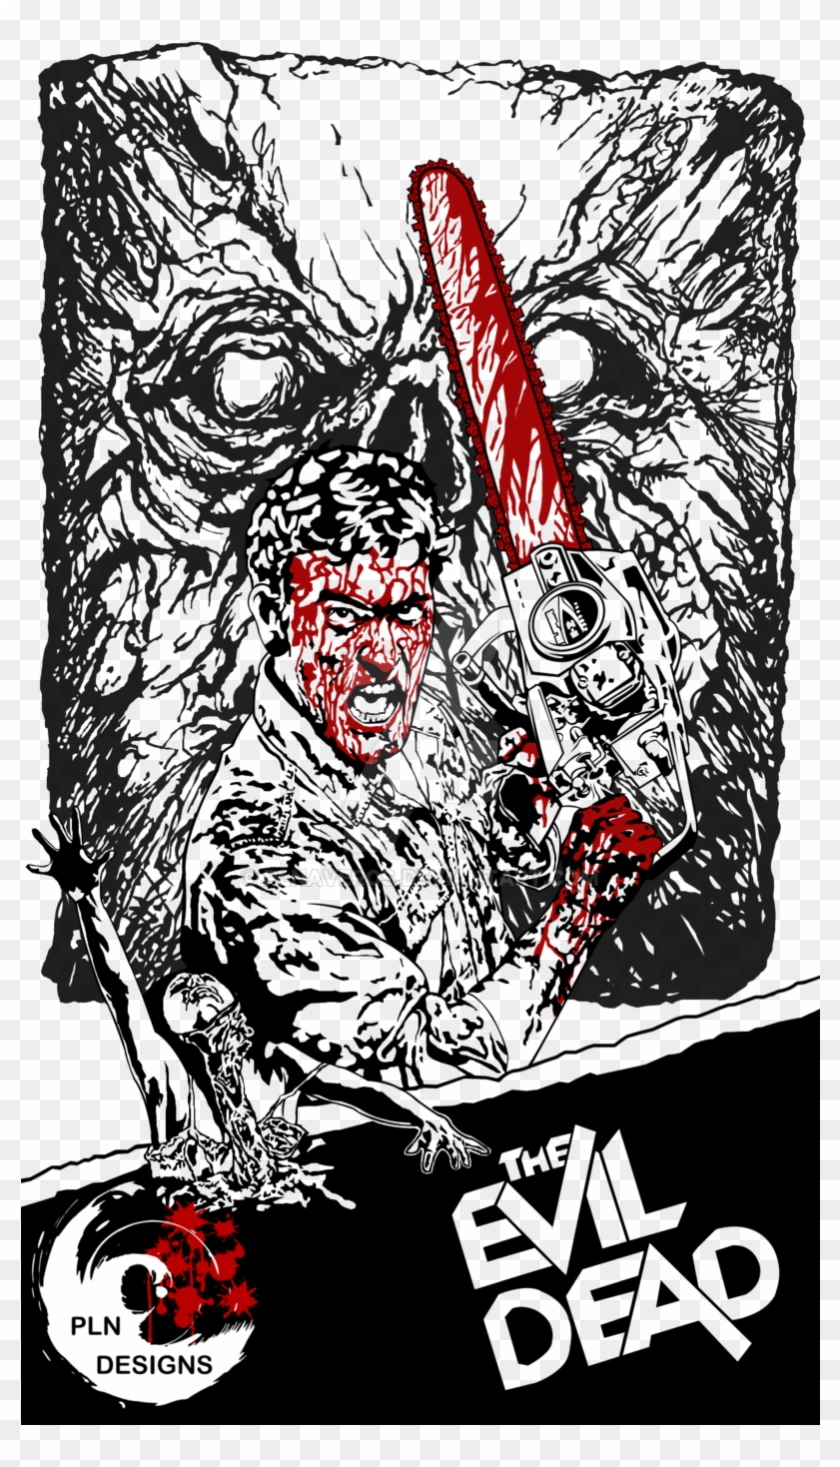 Poster Evil Dead By Plnaveros Poster Evil Dead By Plnaveros - Evil Dead Horror Classic Movie Poster Wall Decor 32x24 #429374